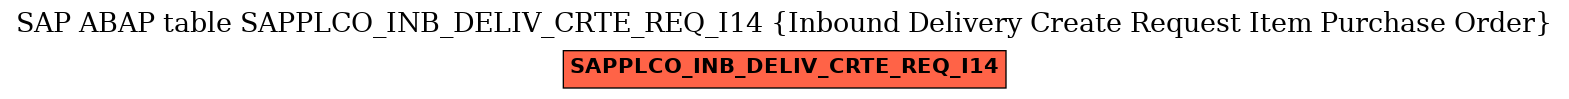 E-R Diagram for table SAPPLCO_INB_DELIV_CRTE_REQ_I14 (Inbound Delivery Create Request Item Purchase Order)